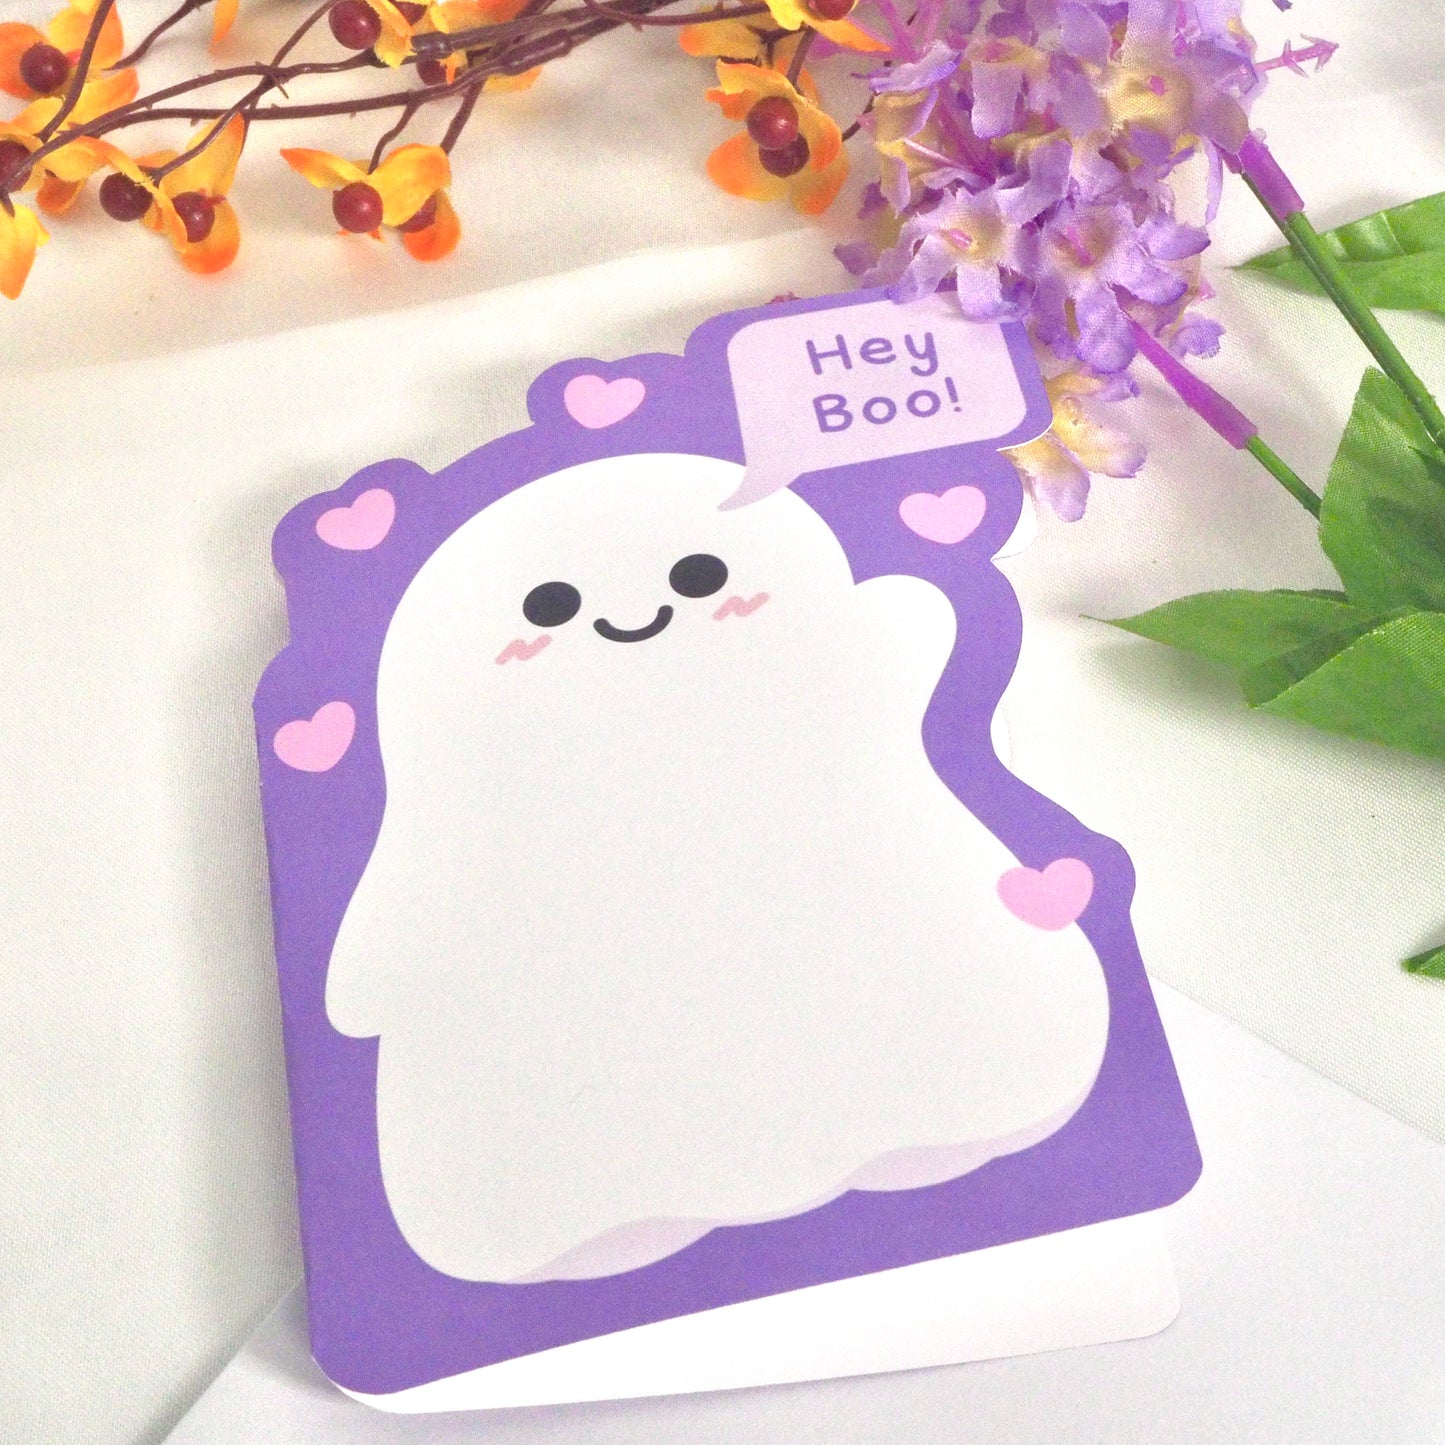 Hey Boo - Cute Ghost Greeting Card